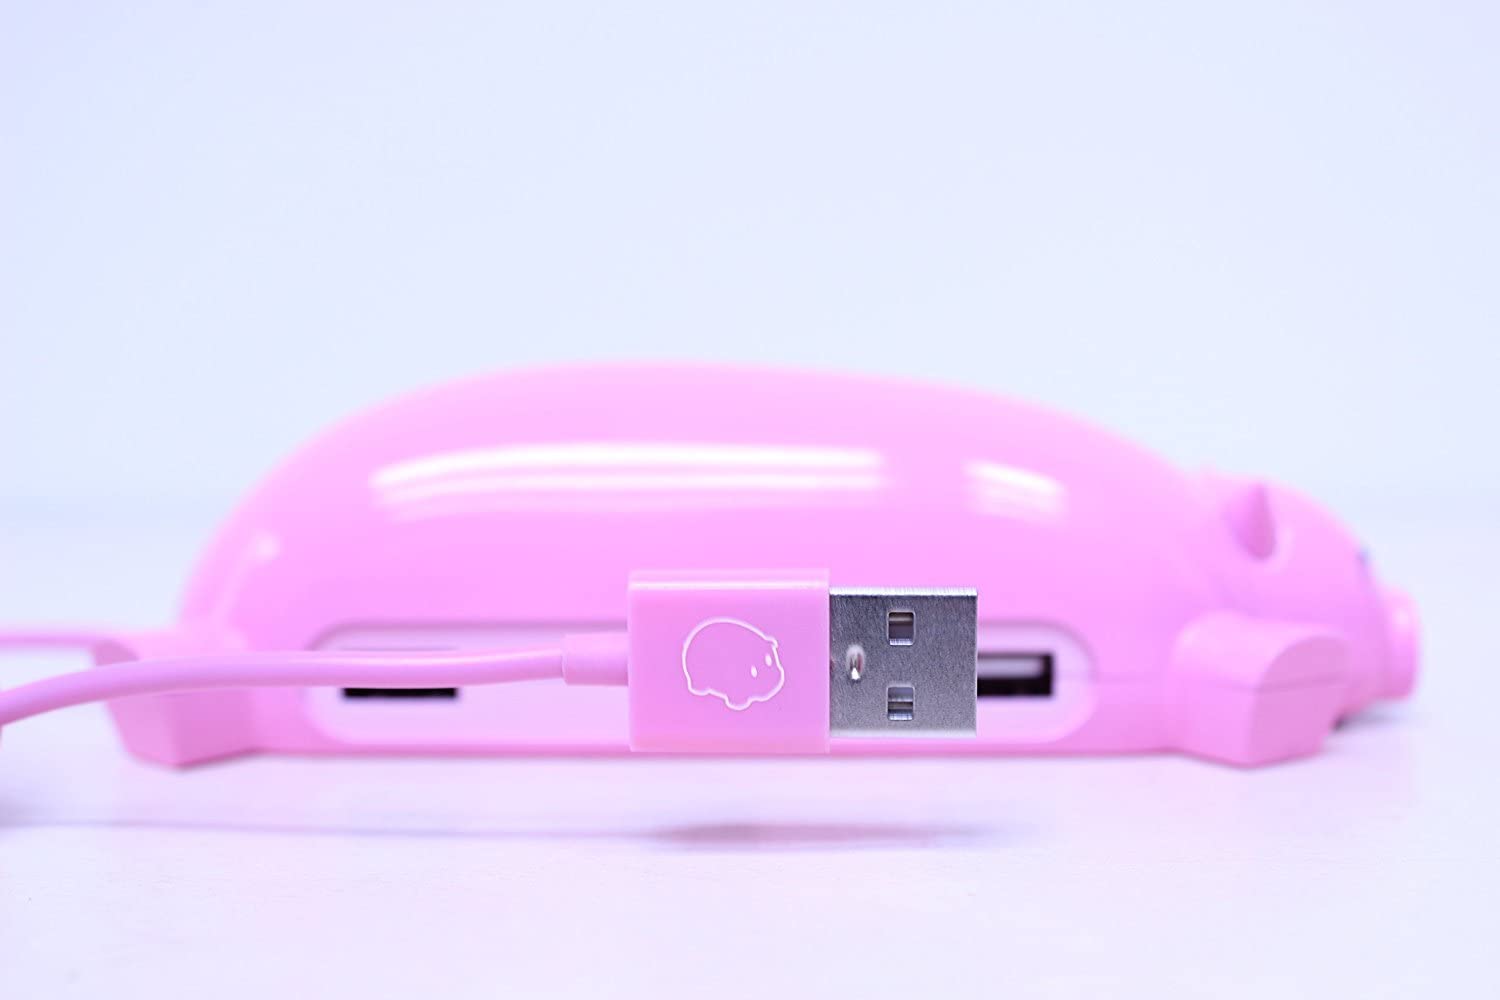 Mama Pig USB hub with feeding piglets usb flash drives